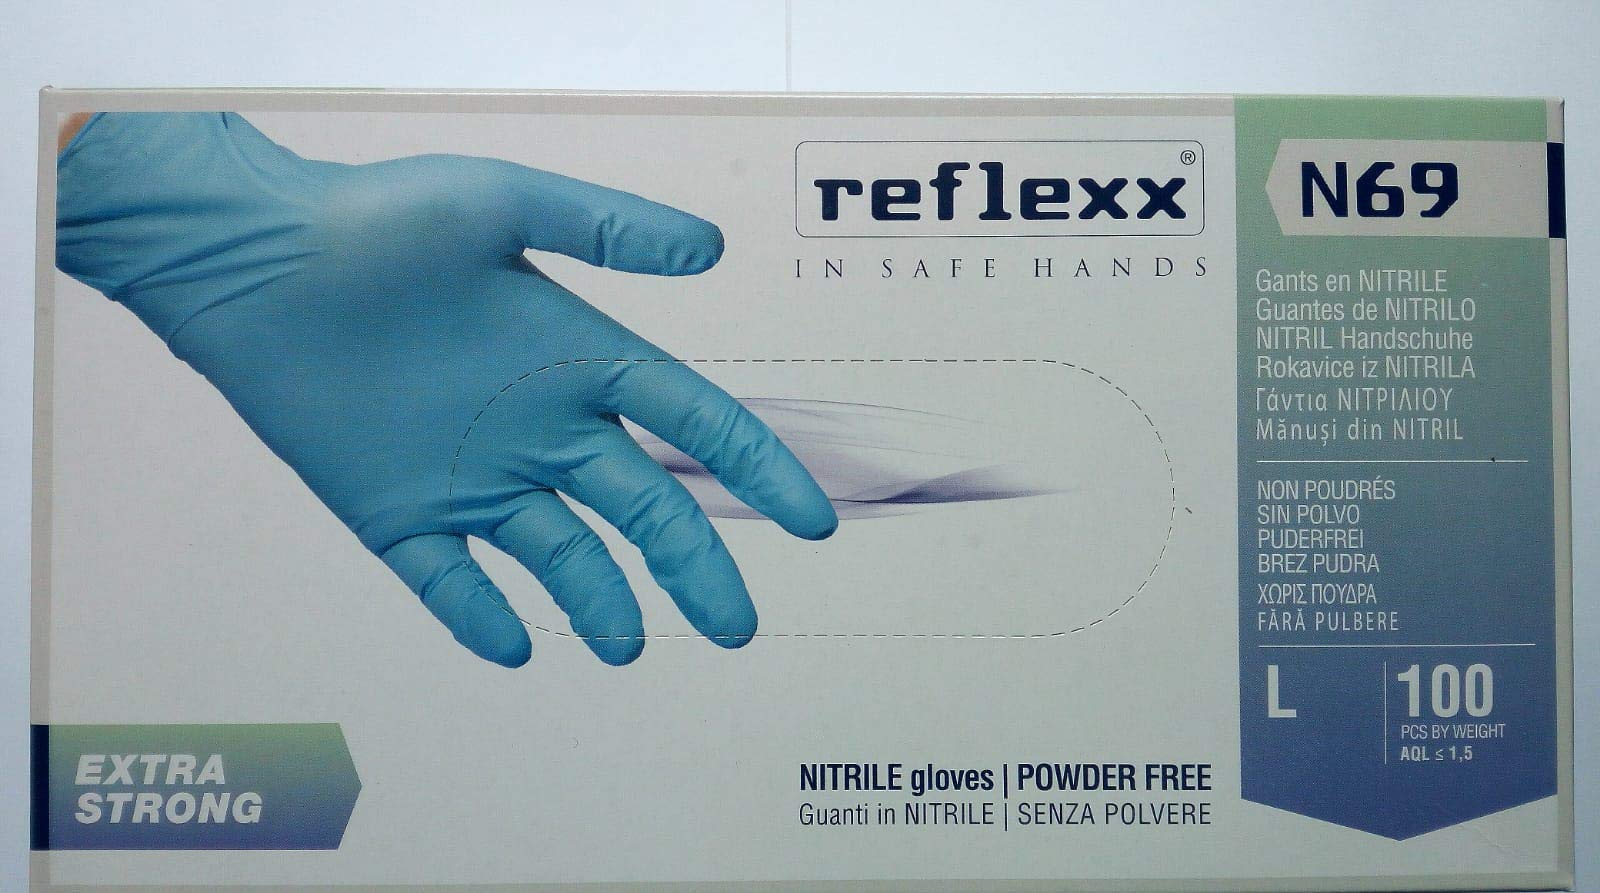 Guanti in nitrile extra strong N69 - tg L - azzurro - Reflexx - conf. 100 pezzi